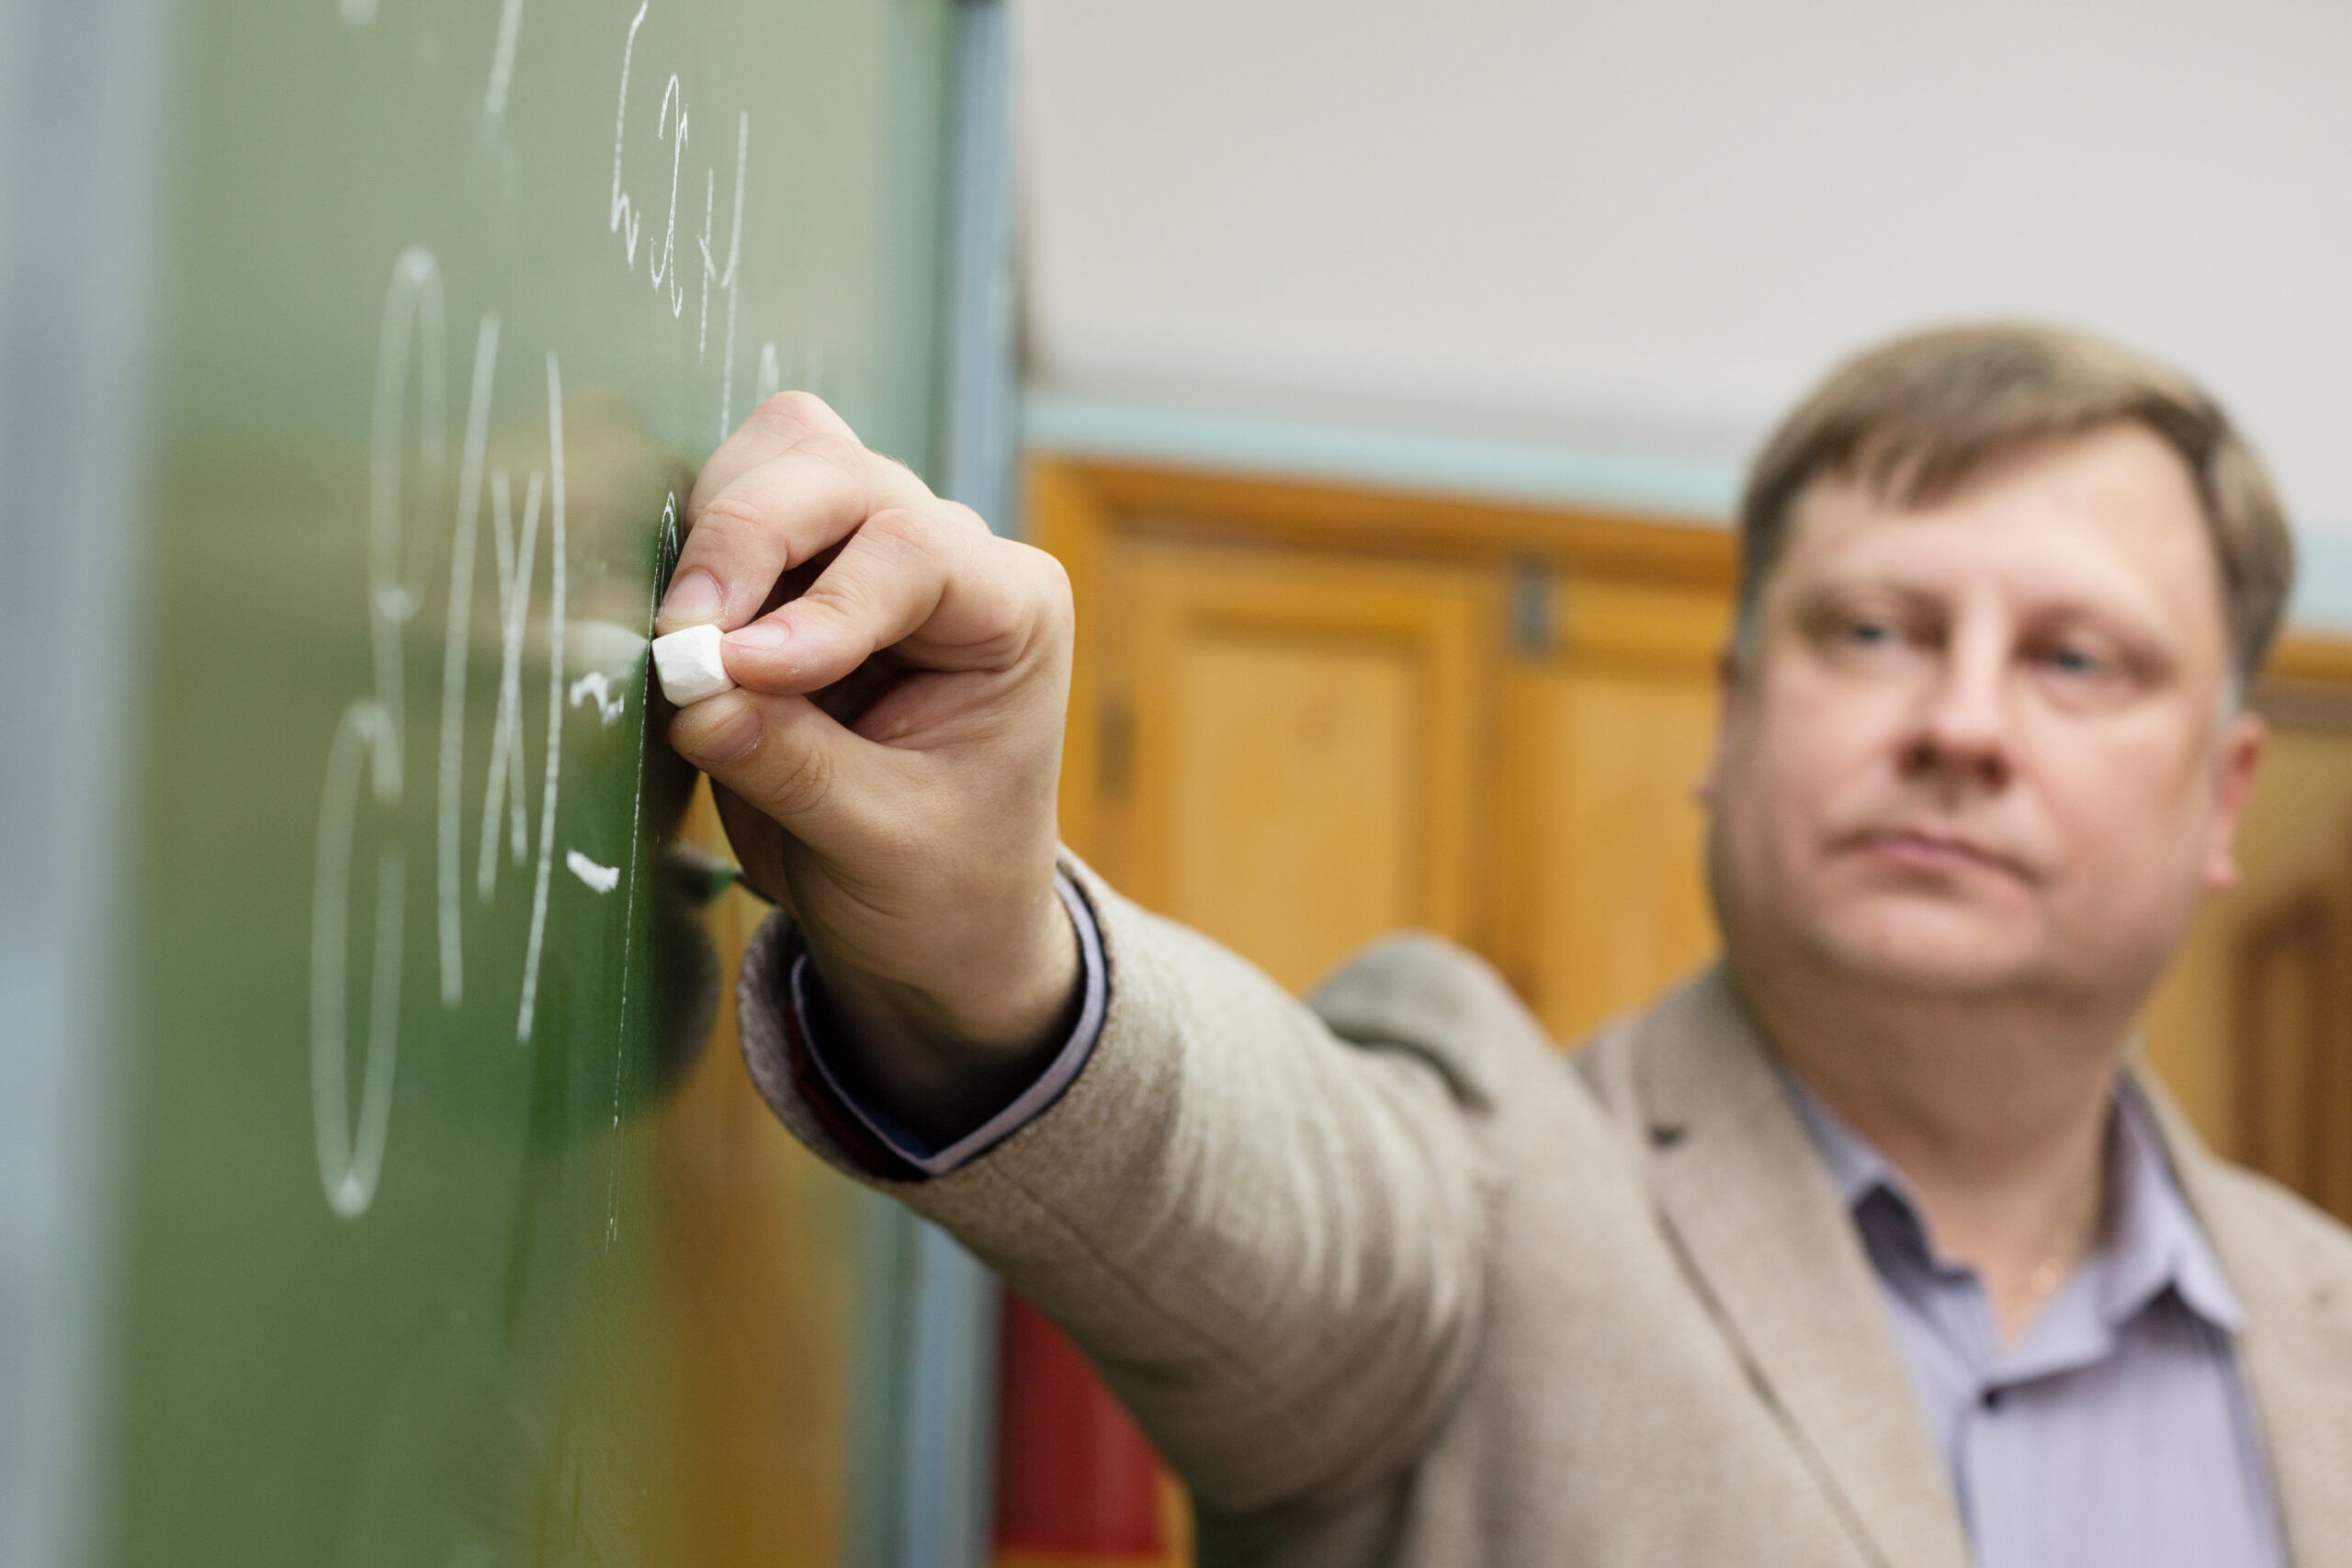 Professor-teacher in classroom at the blackboard writes formulas for students.